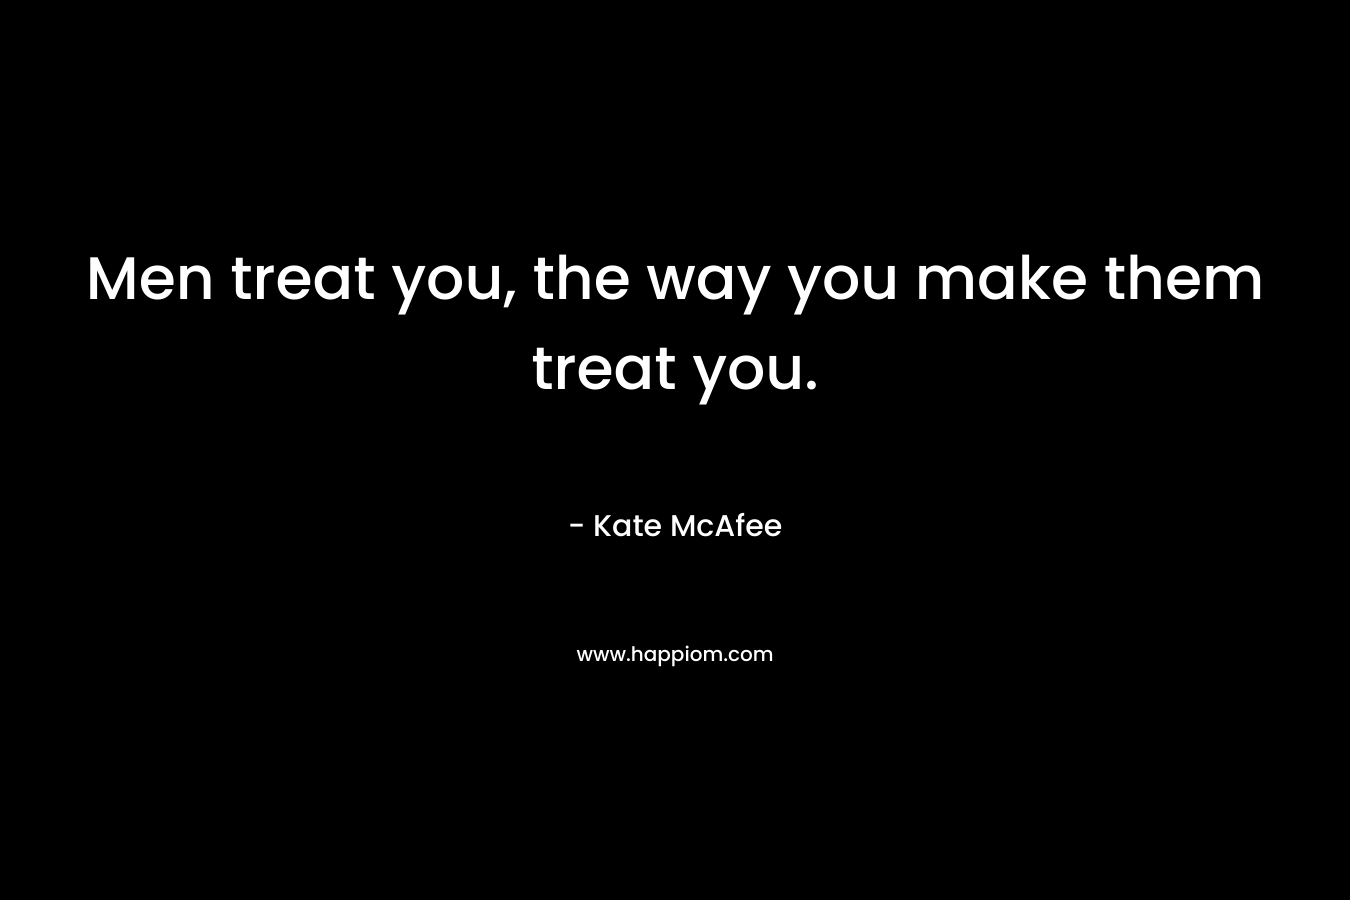 Men treat you, the way you make them treat you.